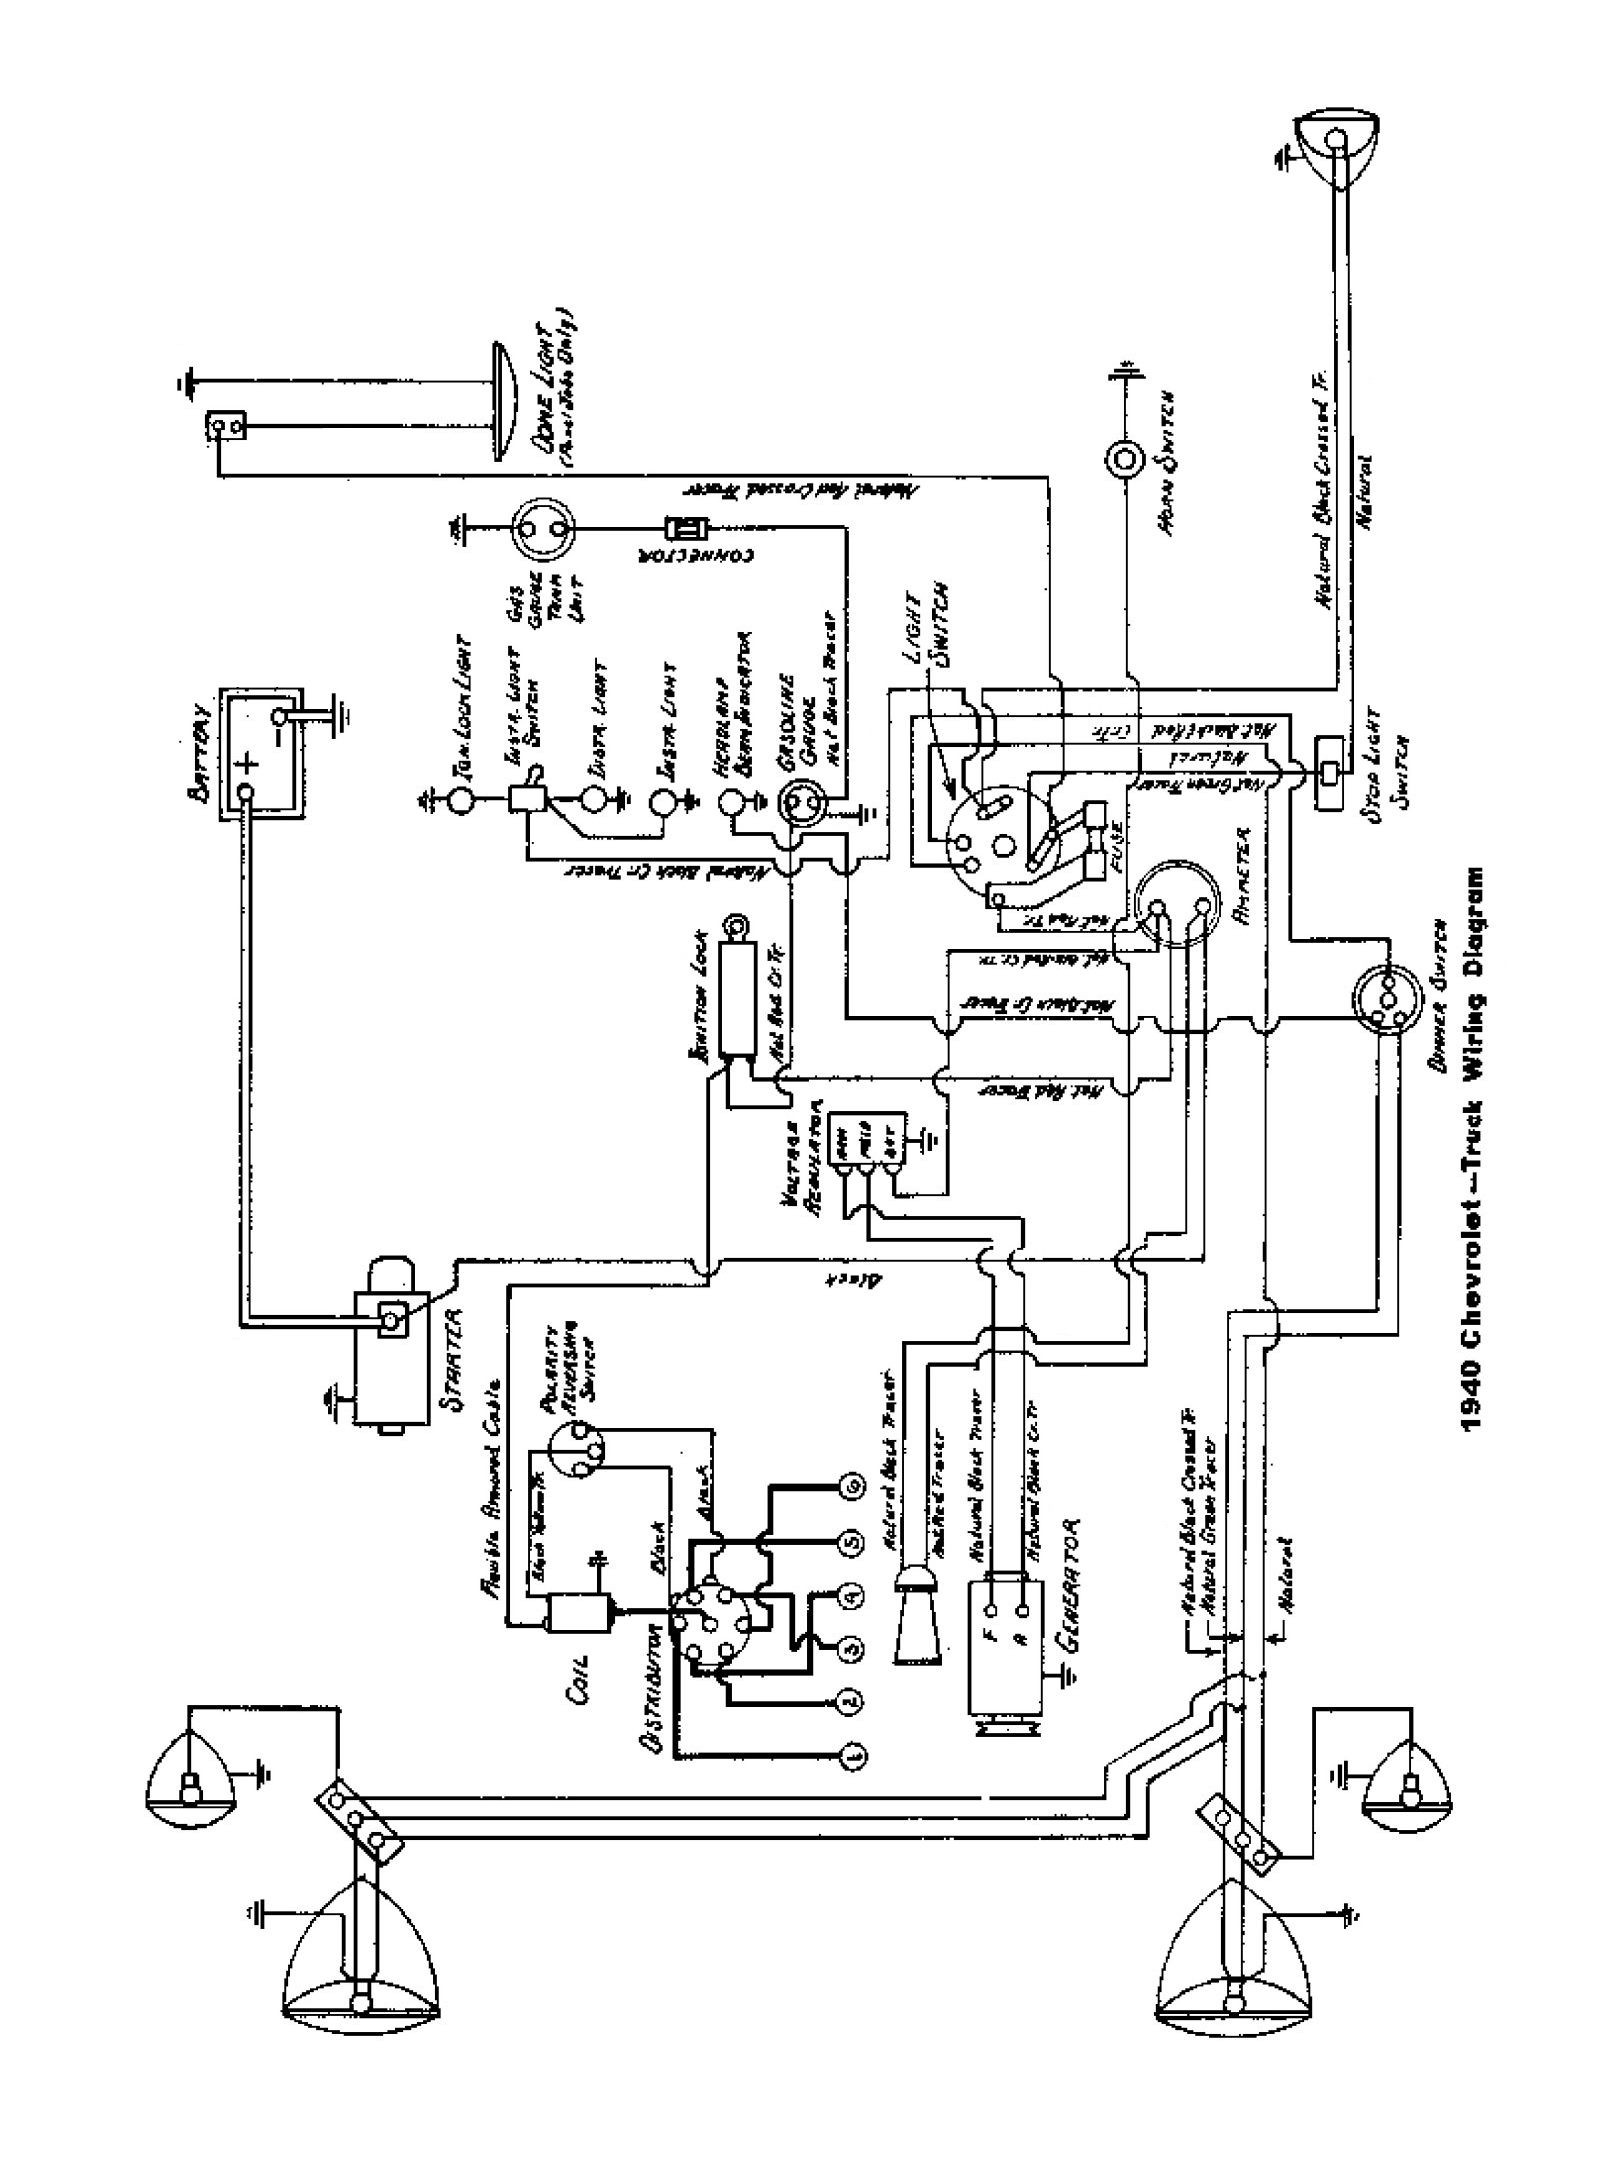 1963 Chevy Truck Wiring Diagram Chevy Wiring Diagrams Of 1963 Chevy Truck Wiring Diagram